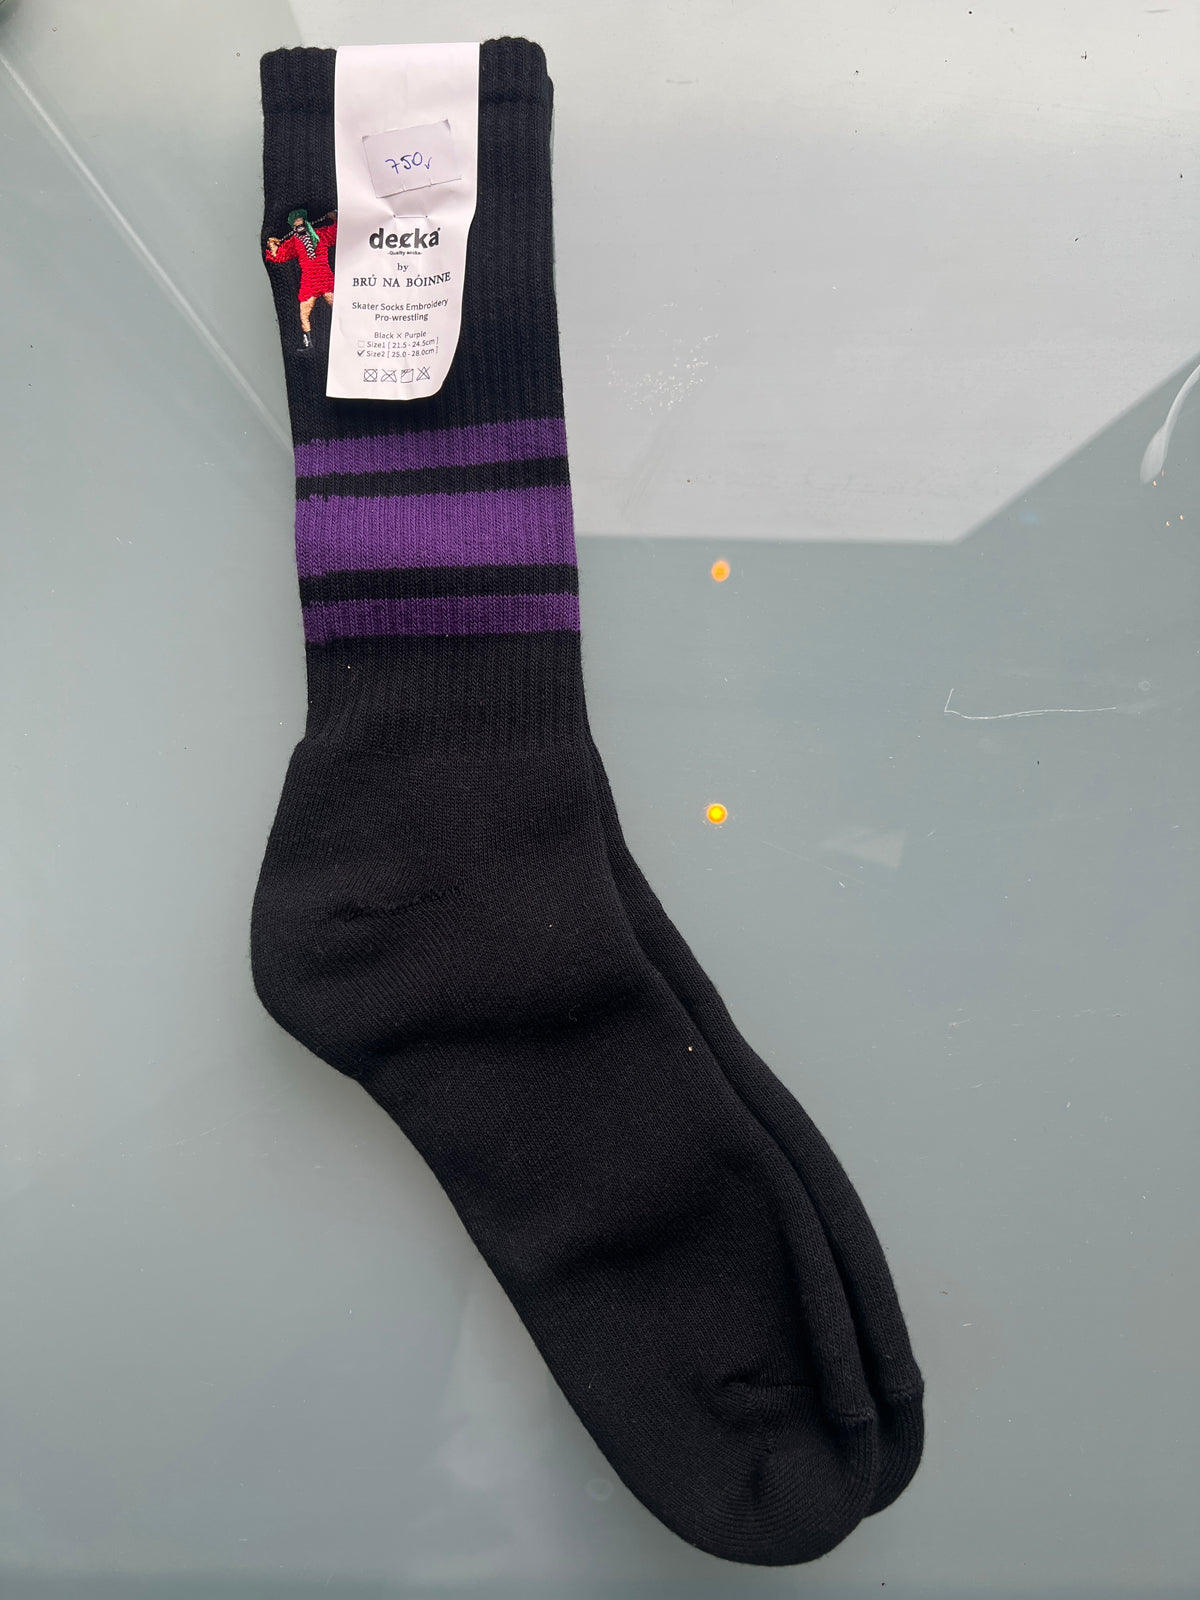 Decka Skater Socks Embroidery / Pro-wrestling - Black x Purple